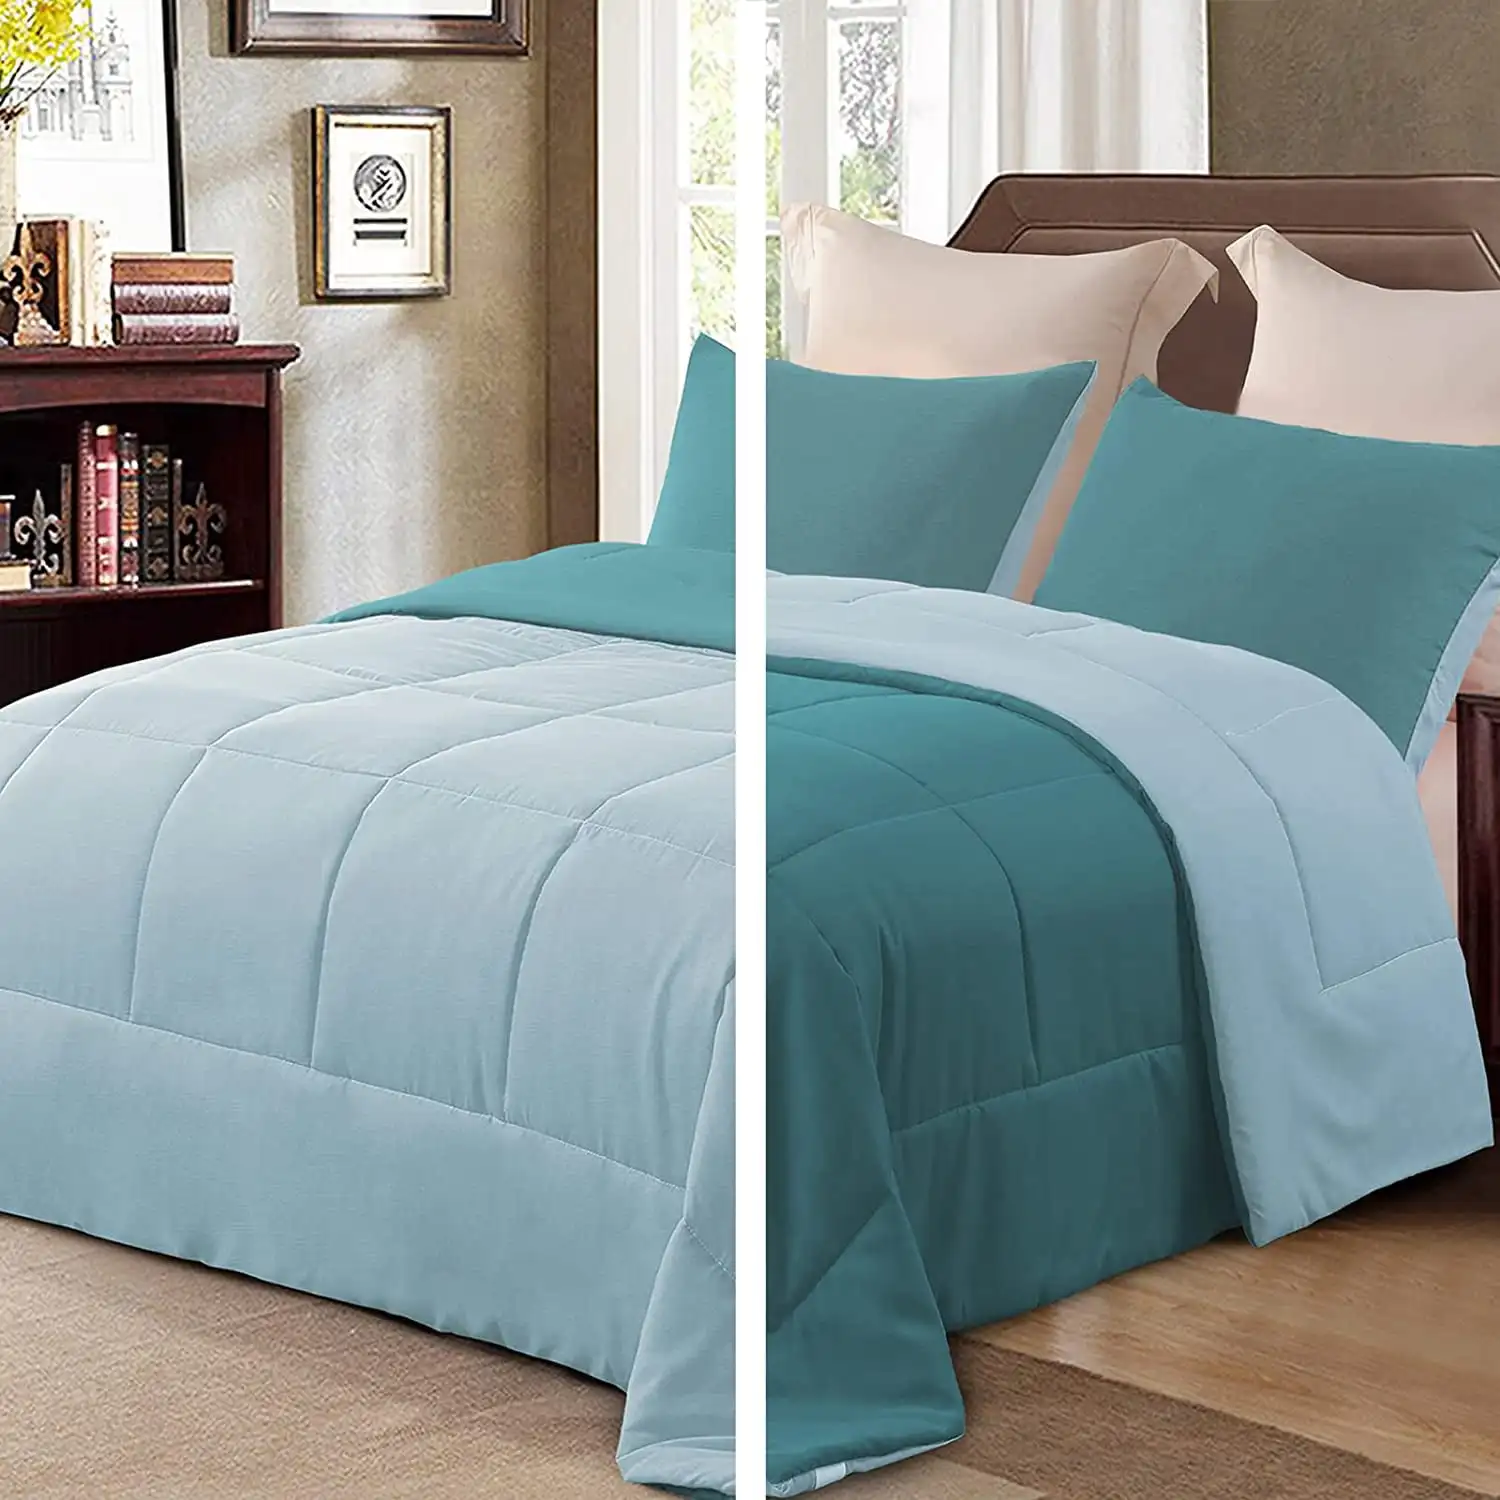 

Exclusivo Mezcla Lightweight Reversible 3-Piece Comforter Set All Seasons, Down Alternative Comforter with 2 Pillow Shams,